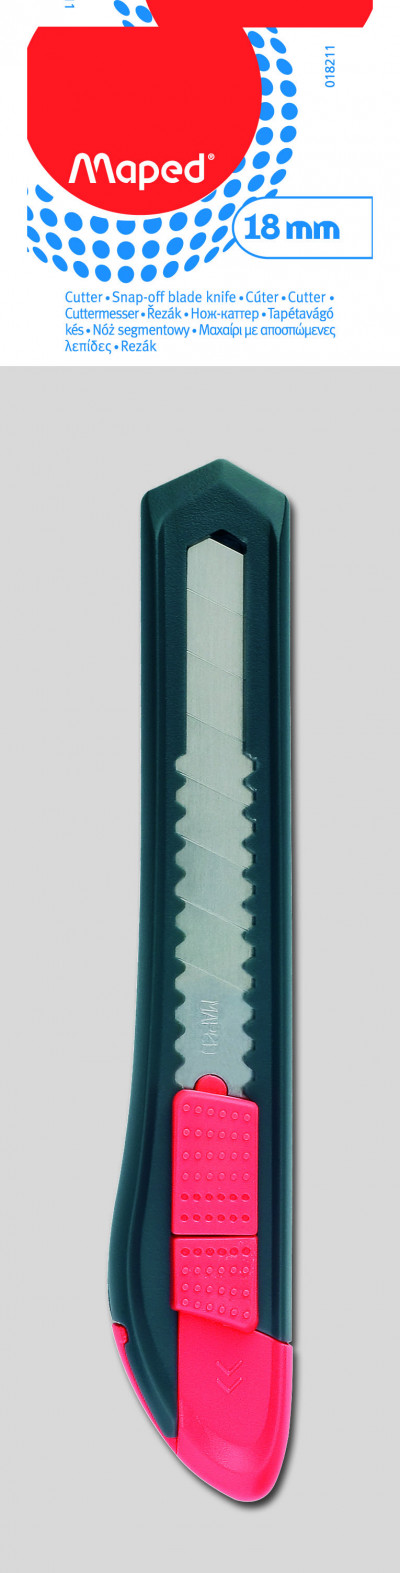 START Нож канцелярский 18 мм, пластиковый, сручным фиксатором лезвия лезвия